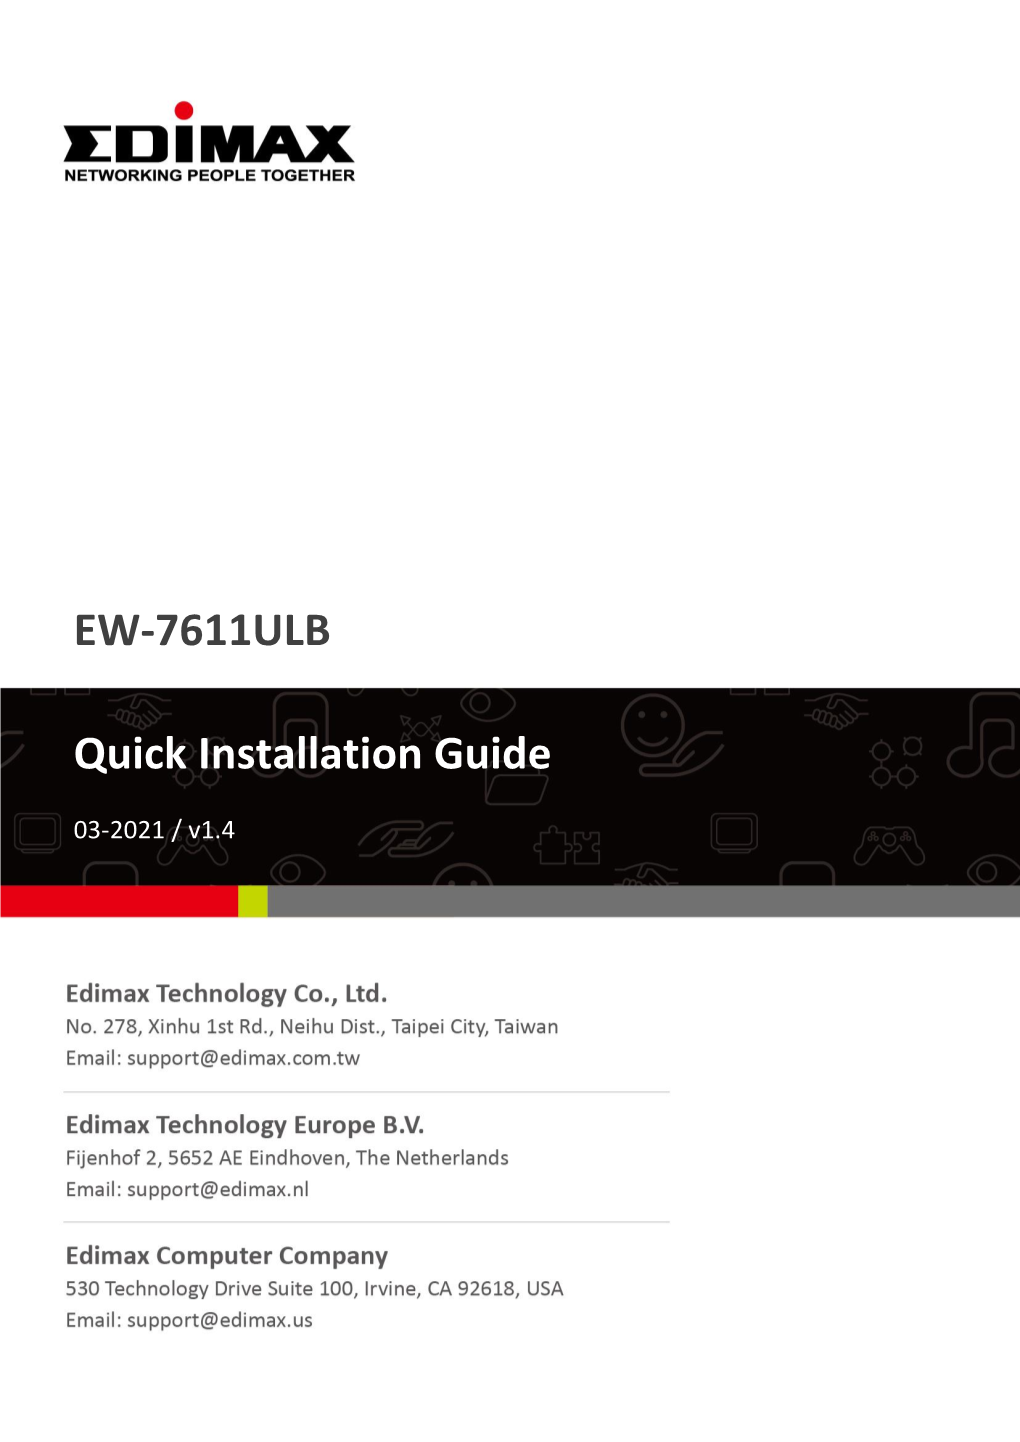 EW-7611ULB Quick Installation Guide